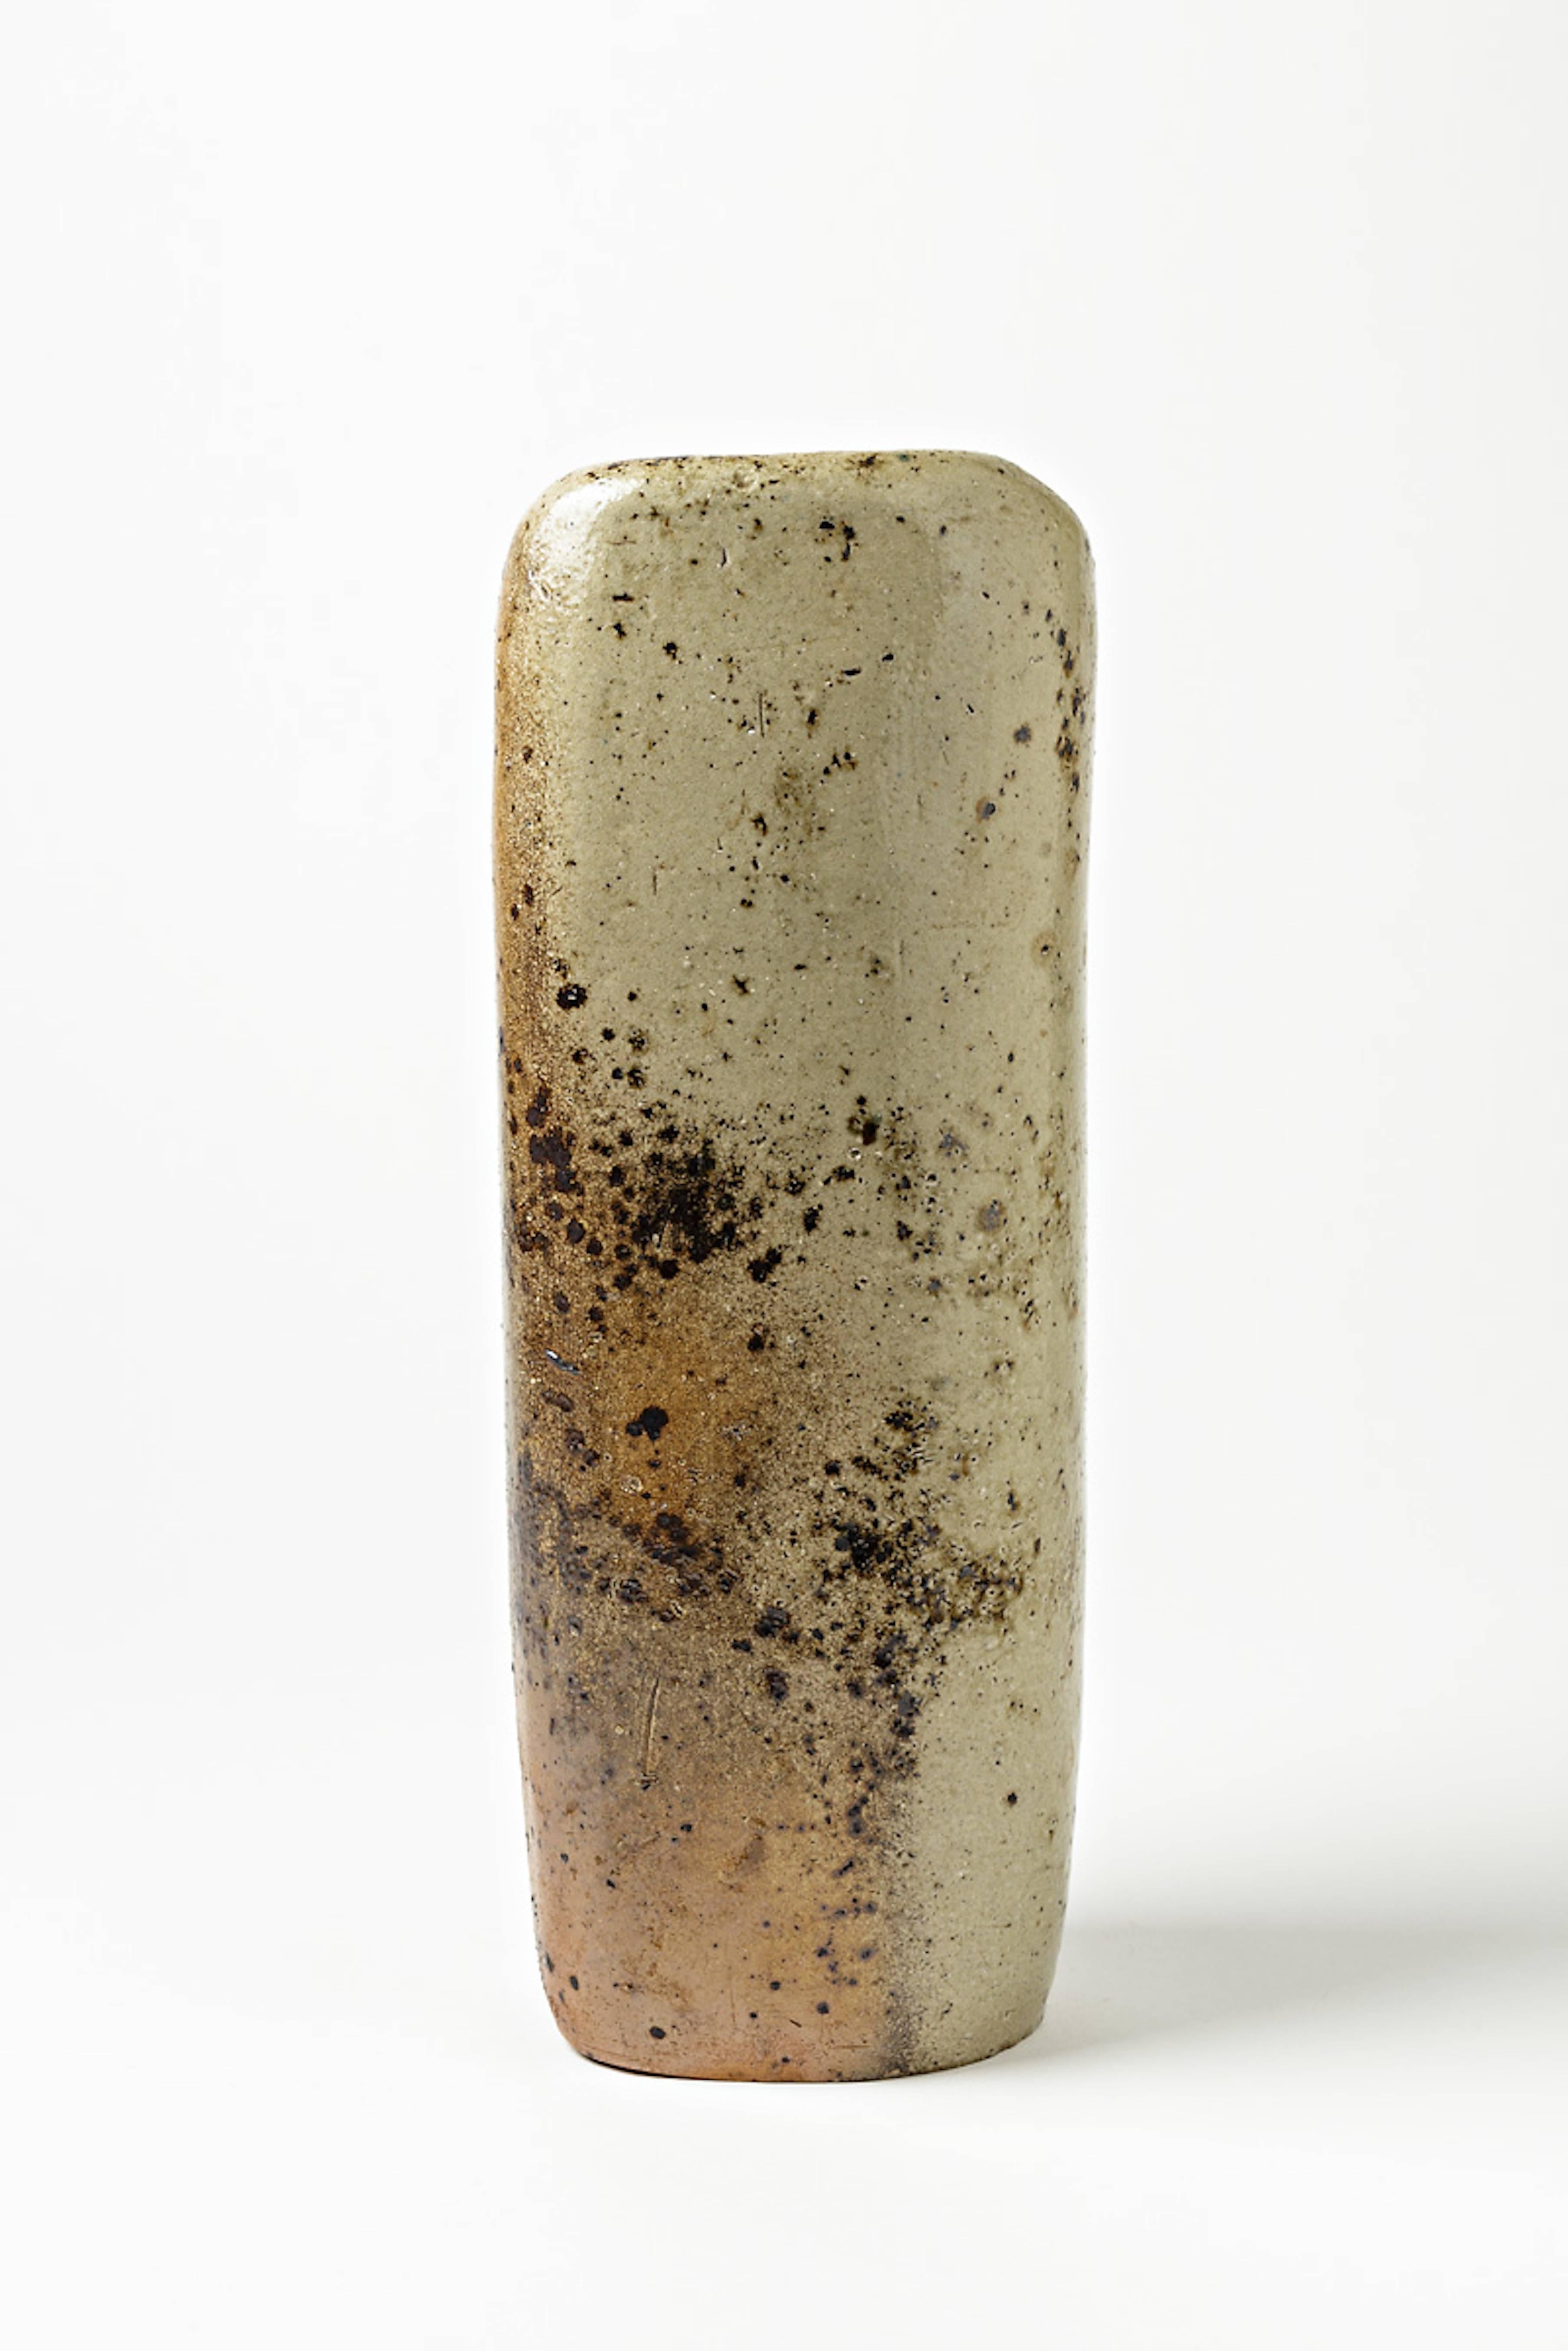 French Exceptional Stoneware Vase by Jean Lerat, La Borne, 1965-1970